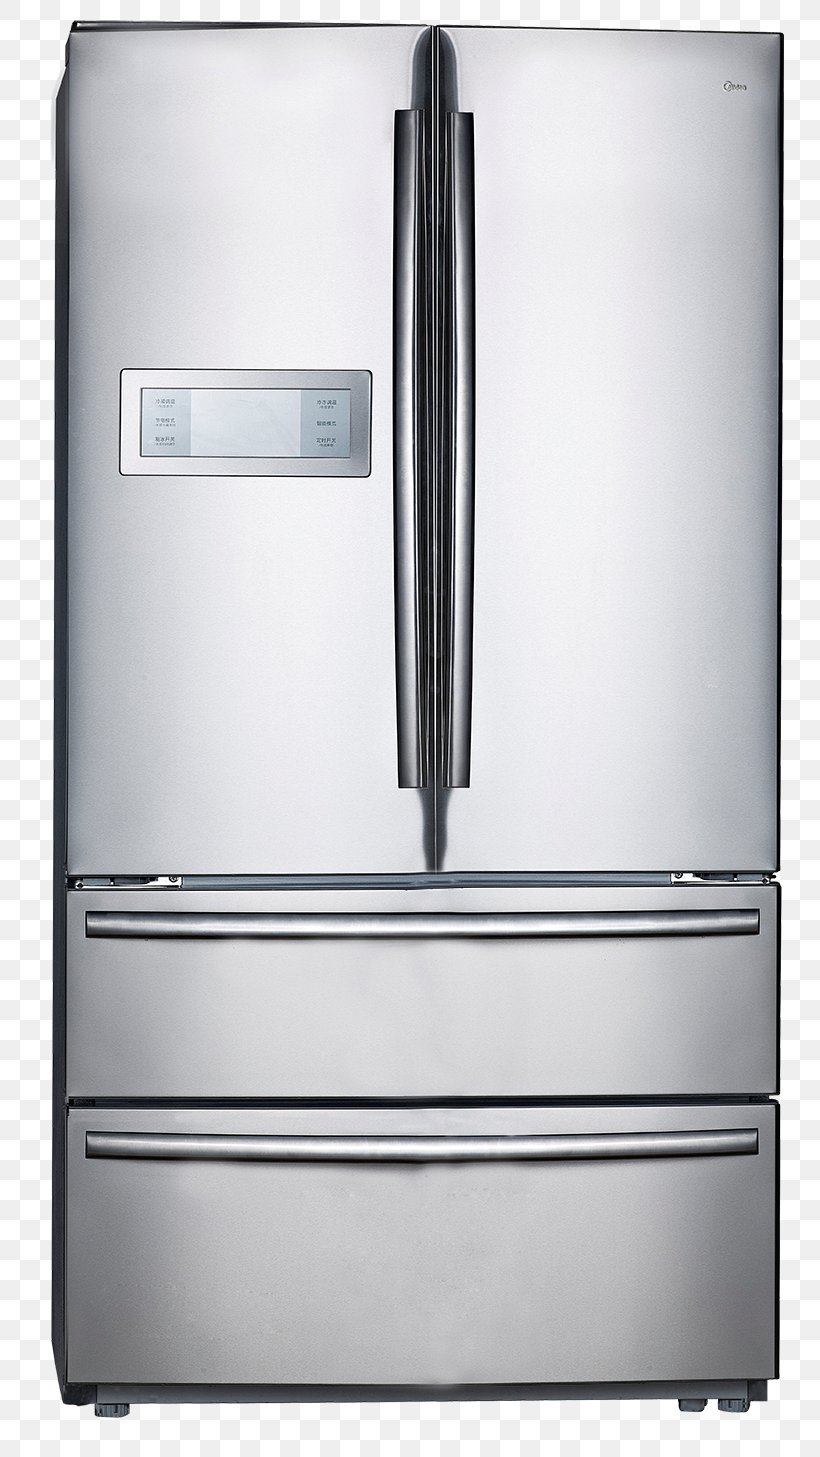 Home Appliance Major Appliance Refrigerator, PNG, 783x1457px, Home Appliance, Home, Kitchen, Kitchen Appliance, Major Appliance Download Free